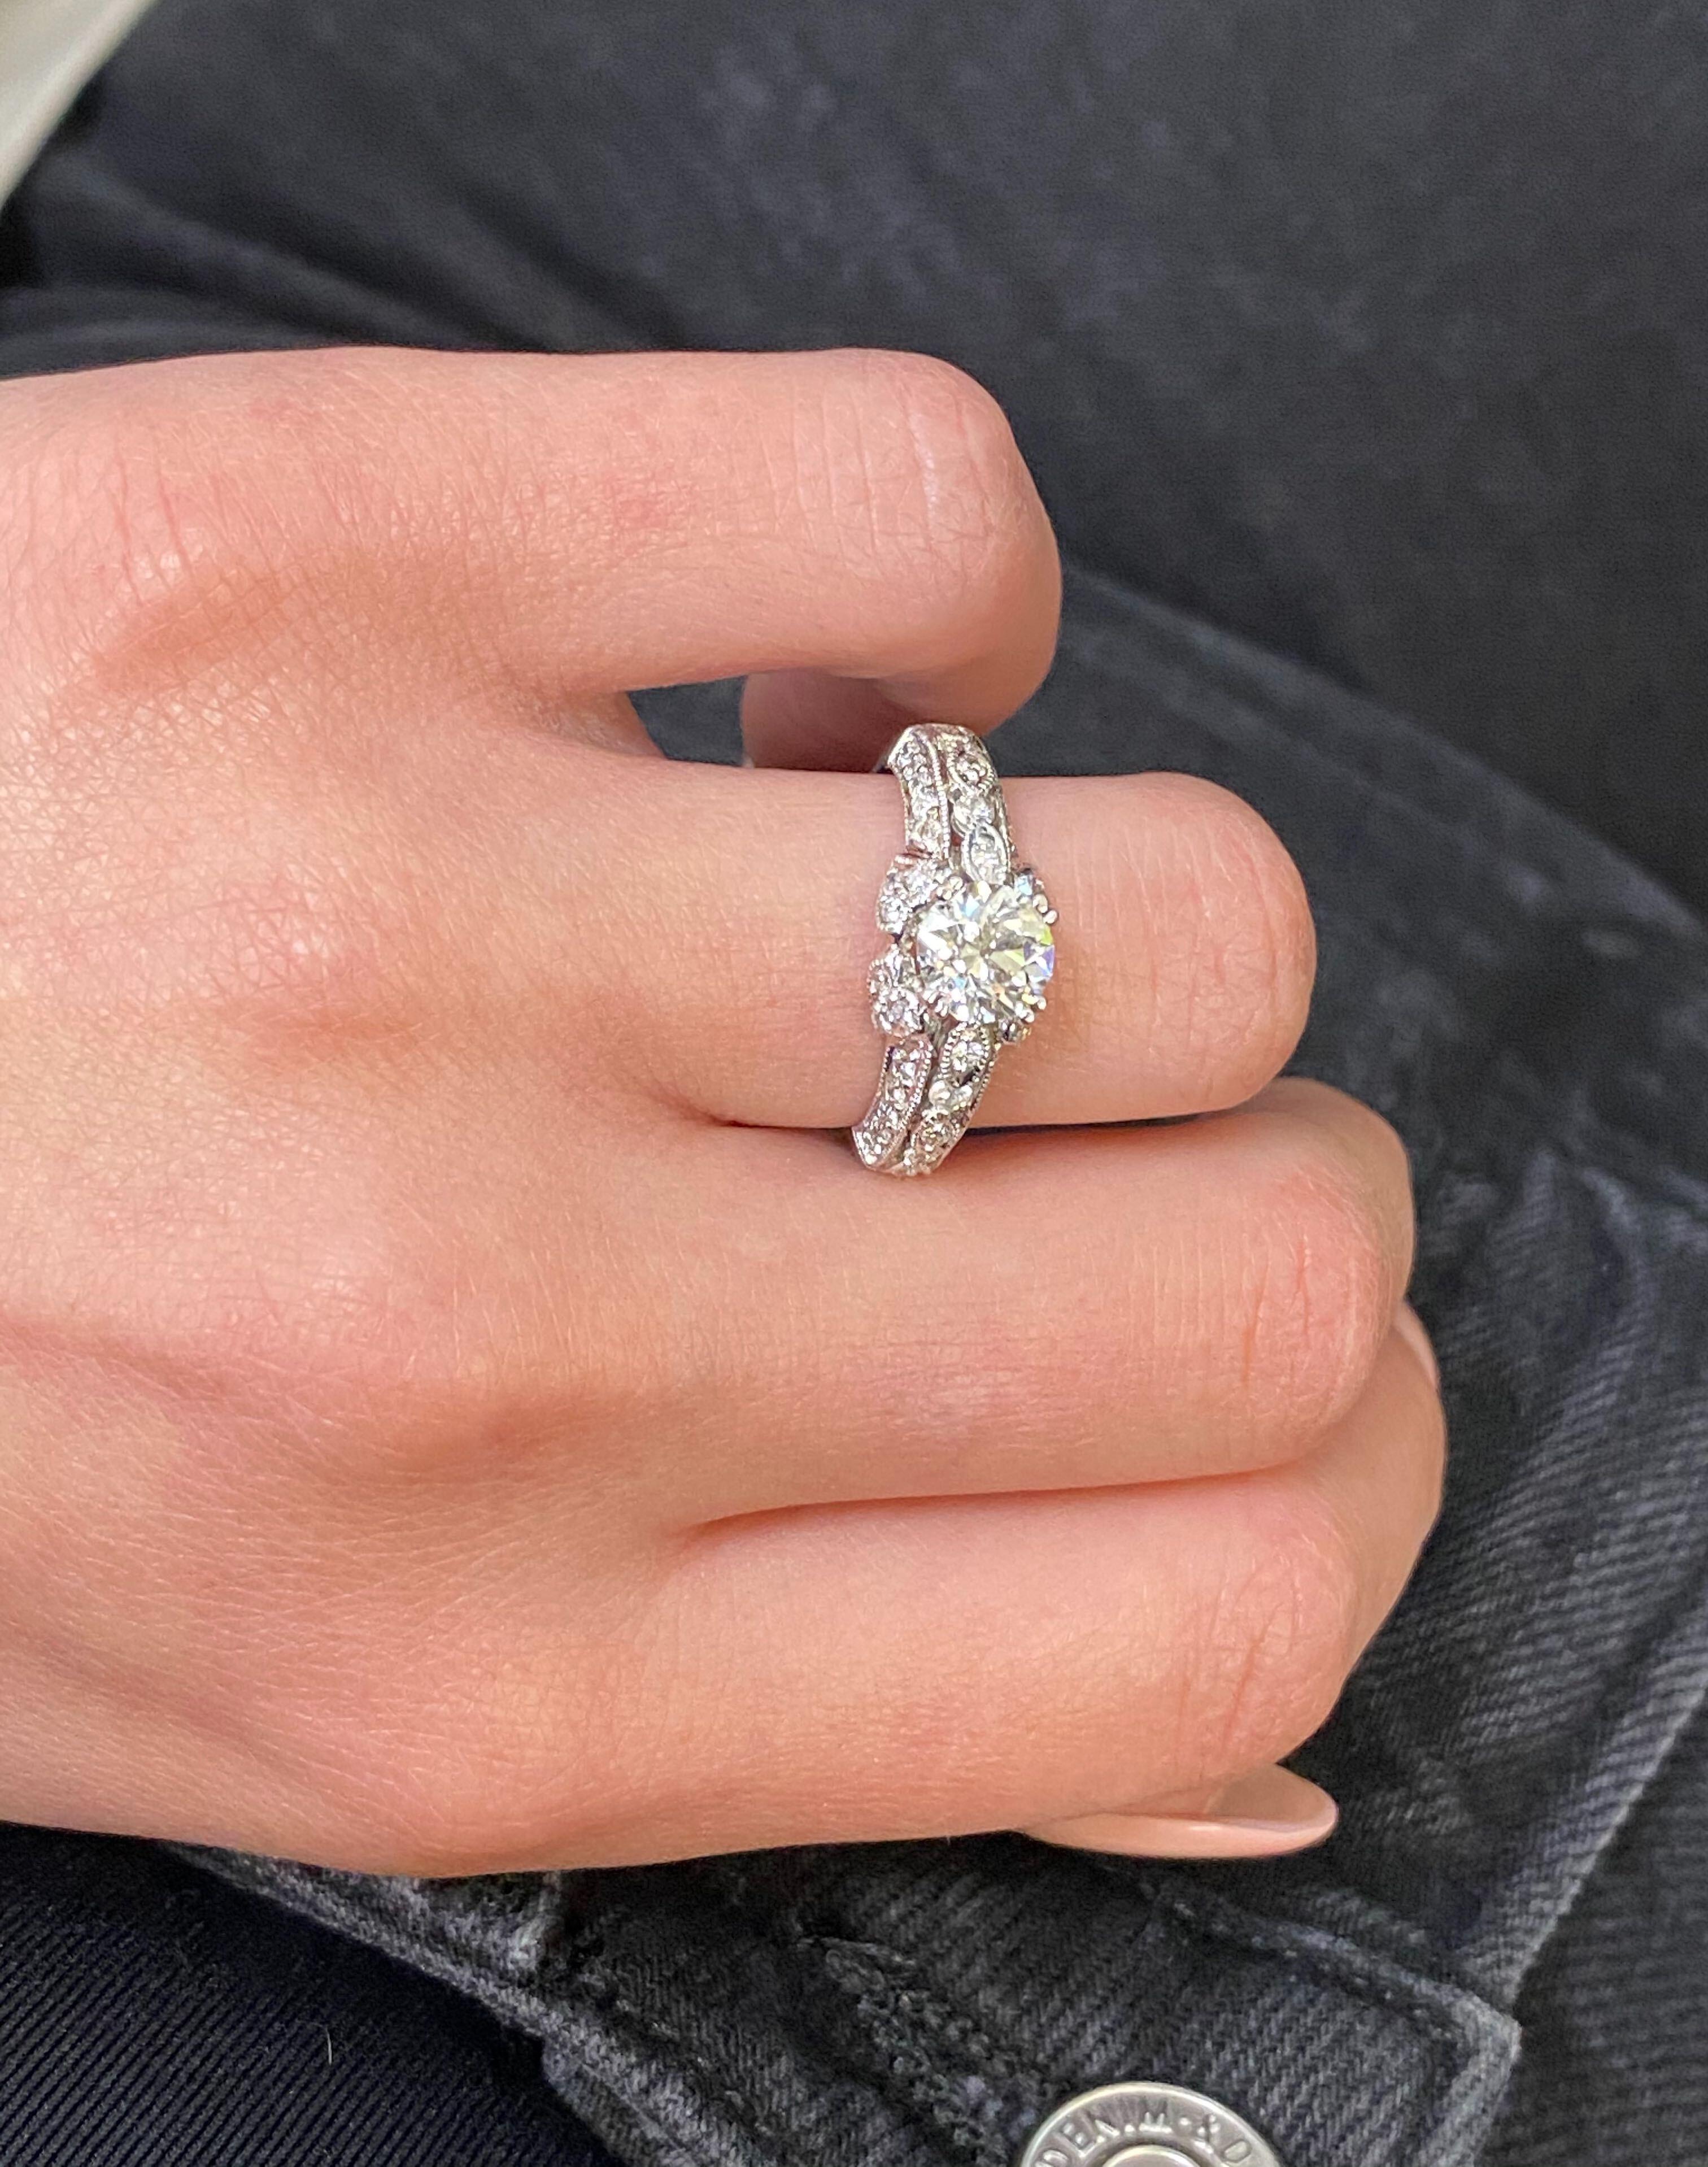 Rachel Koen 14 Karat White Gold Round Cut Diamond Engagement Ring 1.65 Carat For Sale 2